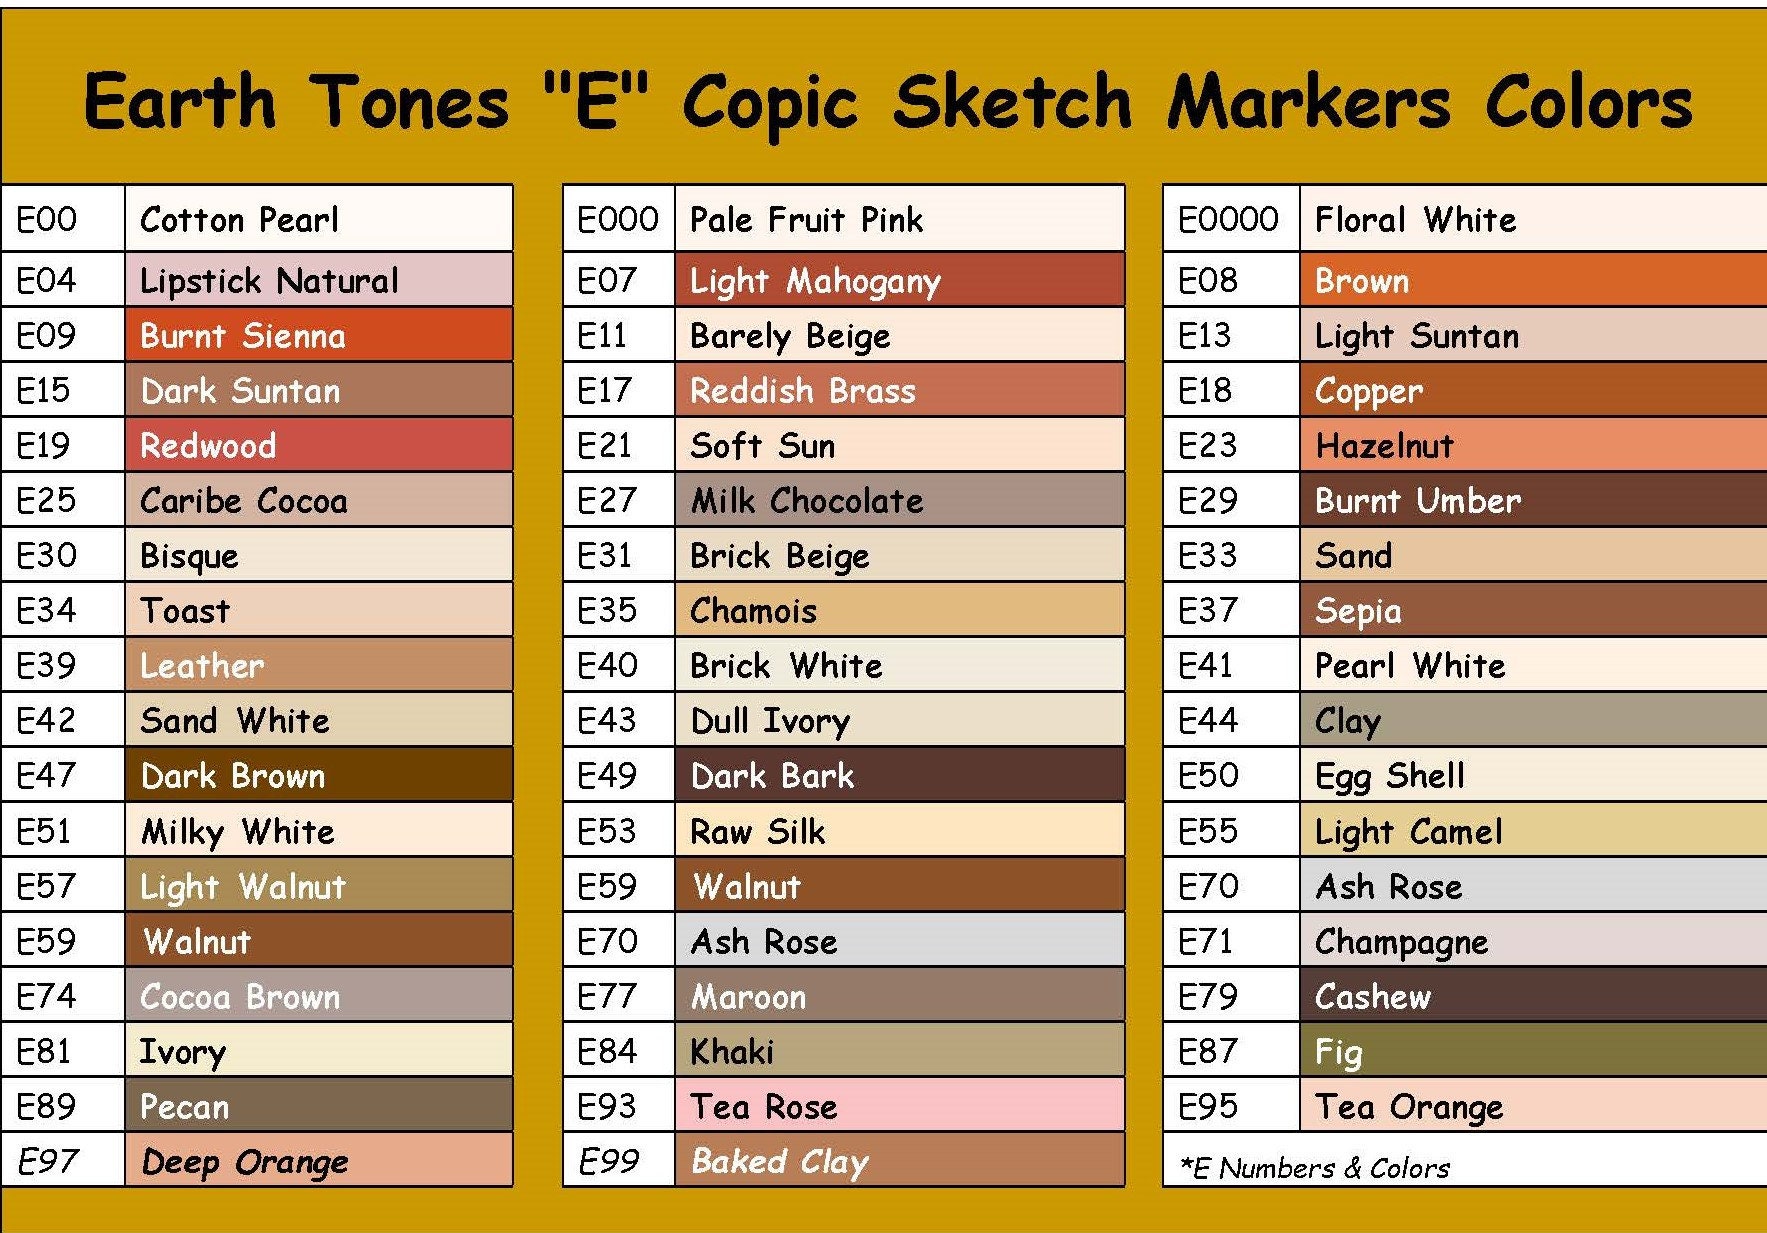 COPIC Sketch Marker Earth/Skin Tones (Individual)